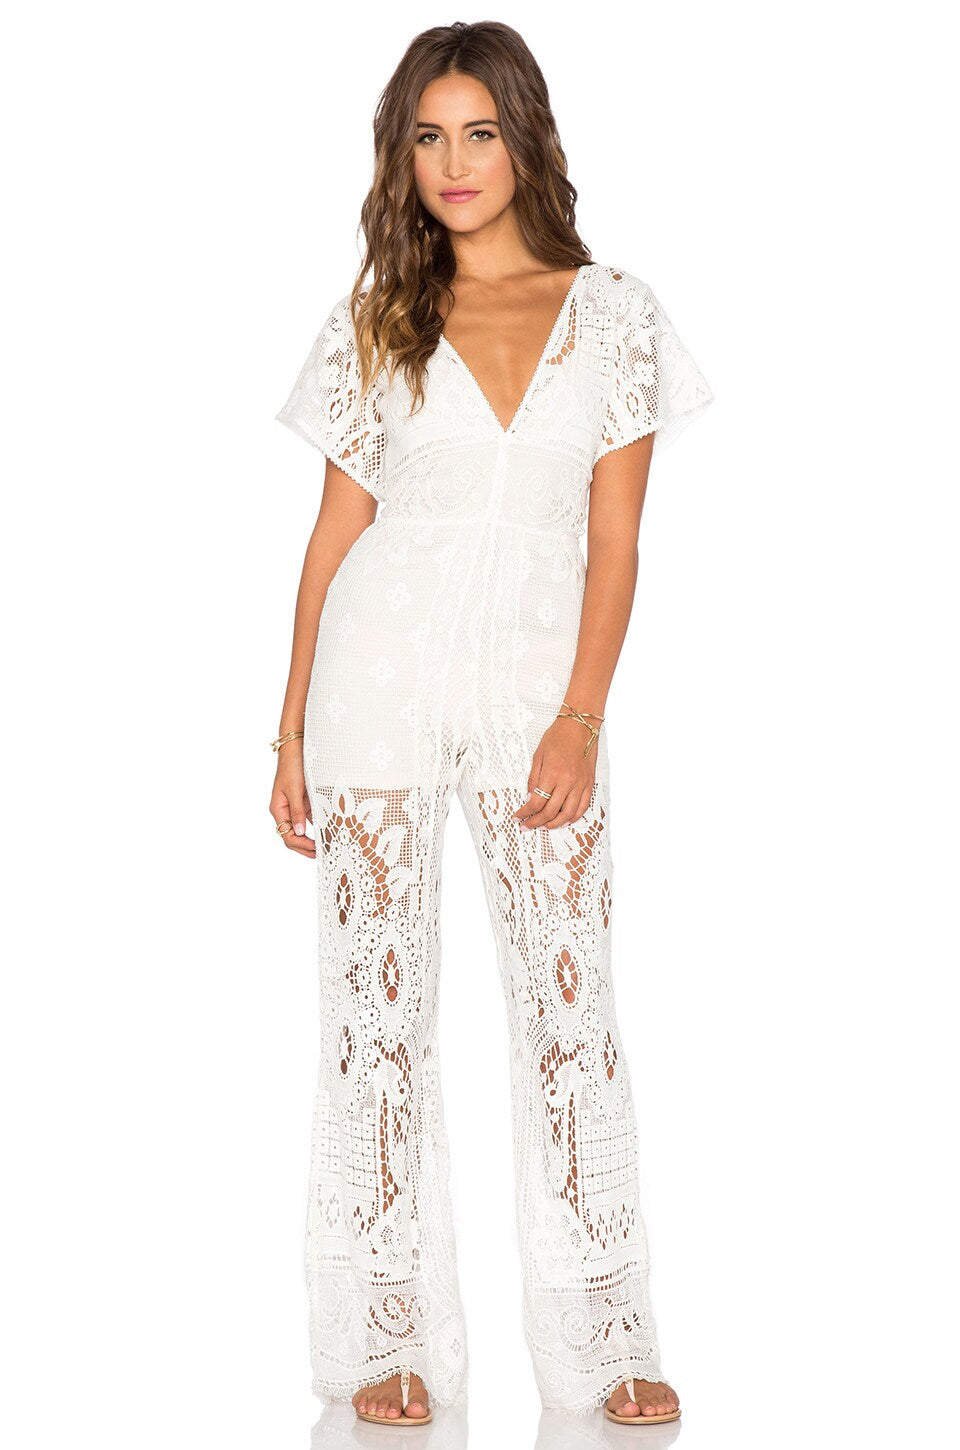 Woodstock White Lace Pantsuit